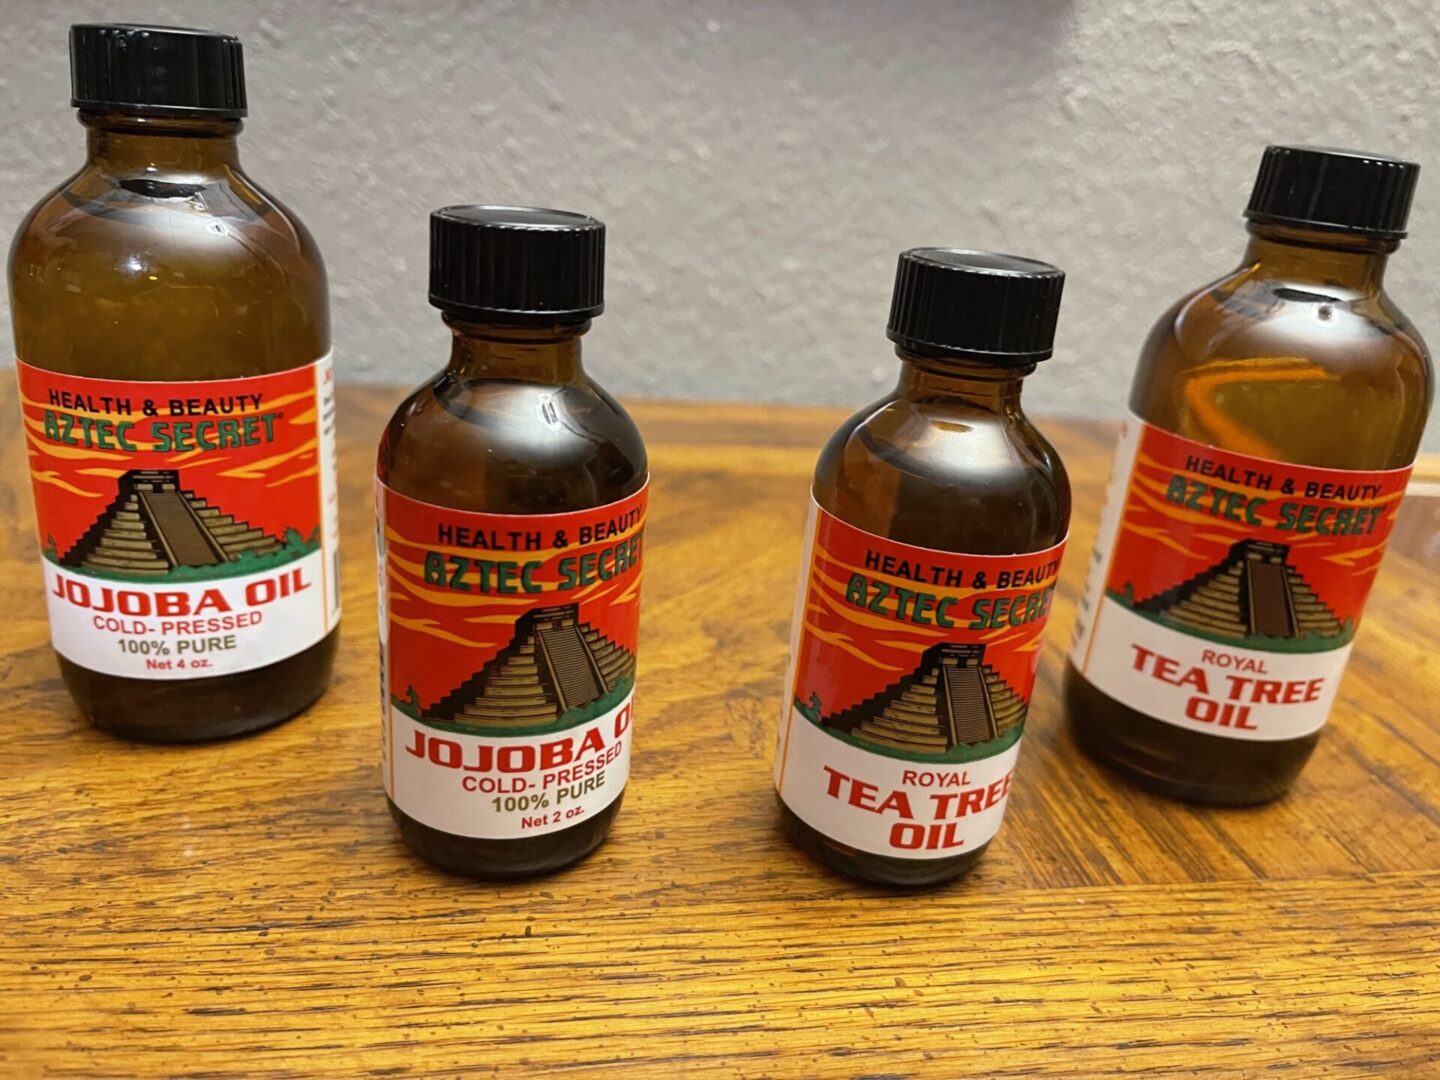 Bottles of our jojoba oil and tea tree oil products | Aztec Secret Health & Beauty LTD